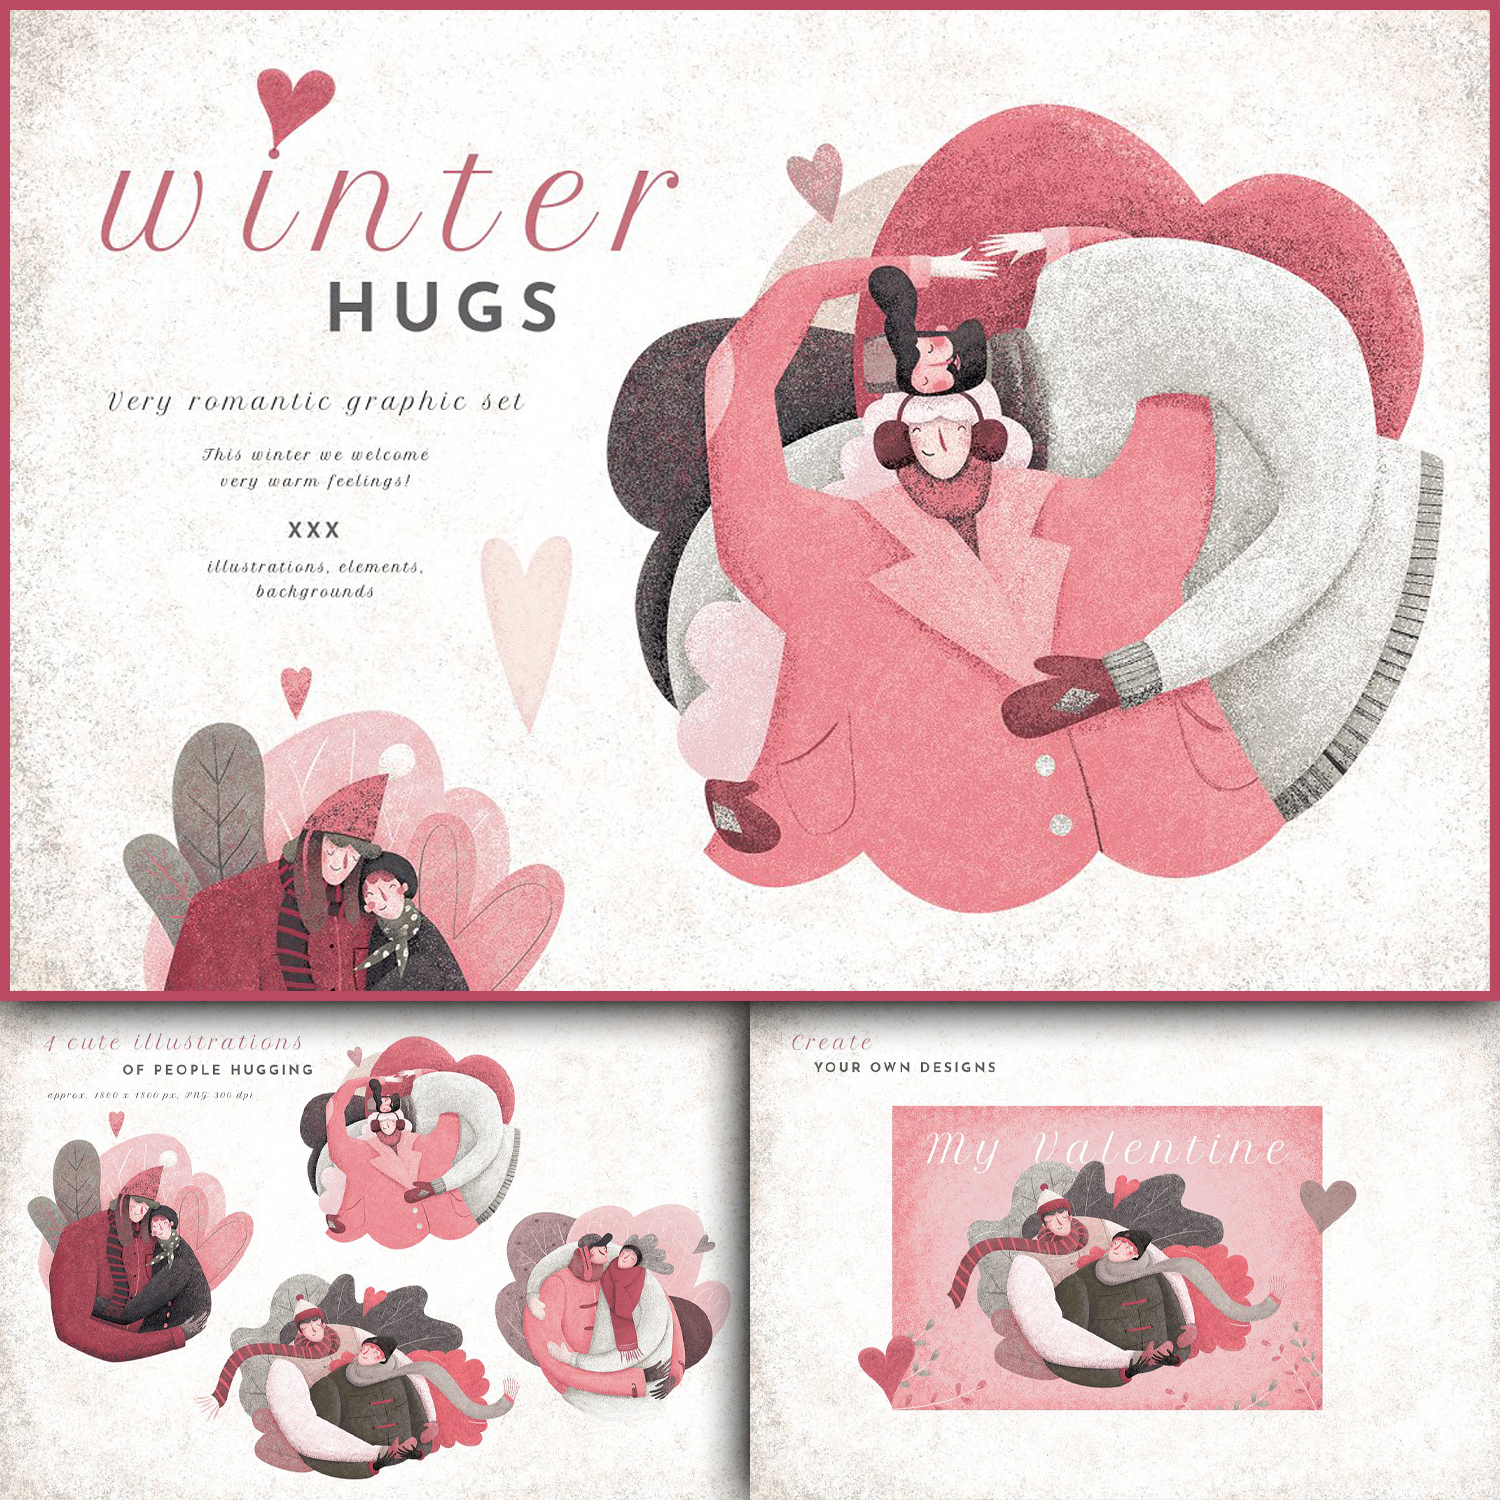 Prints with winter hugs illustrations set.